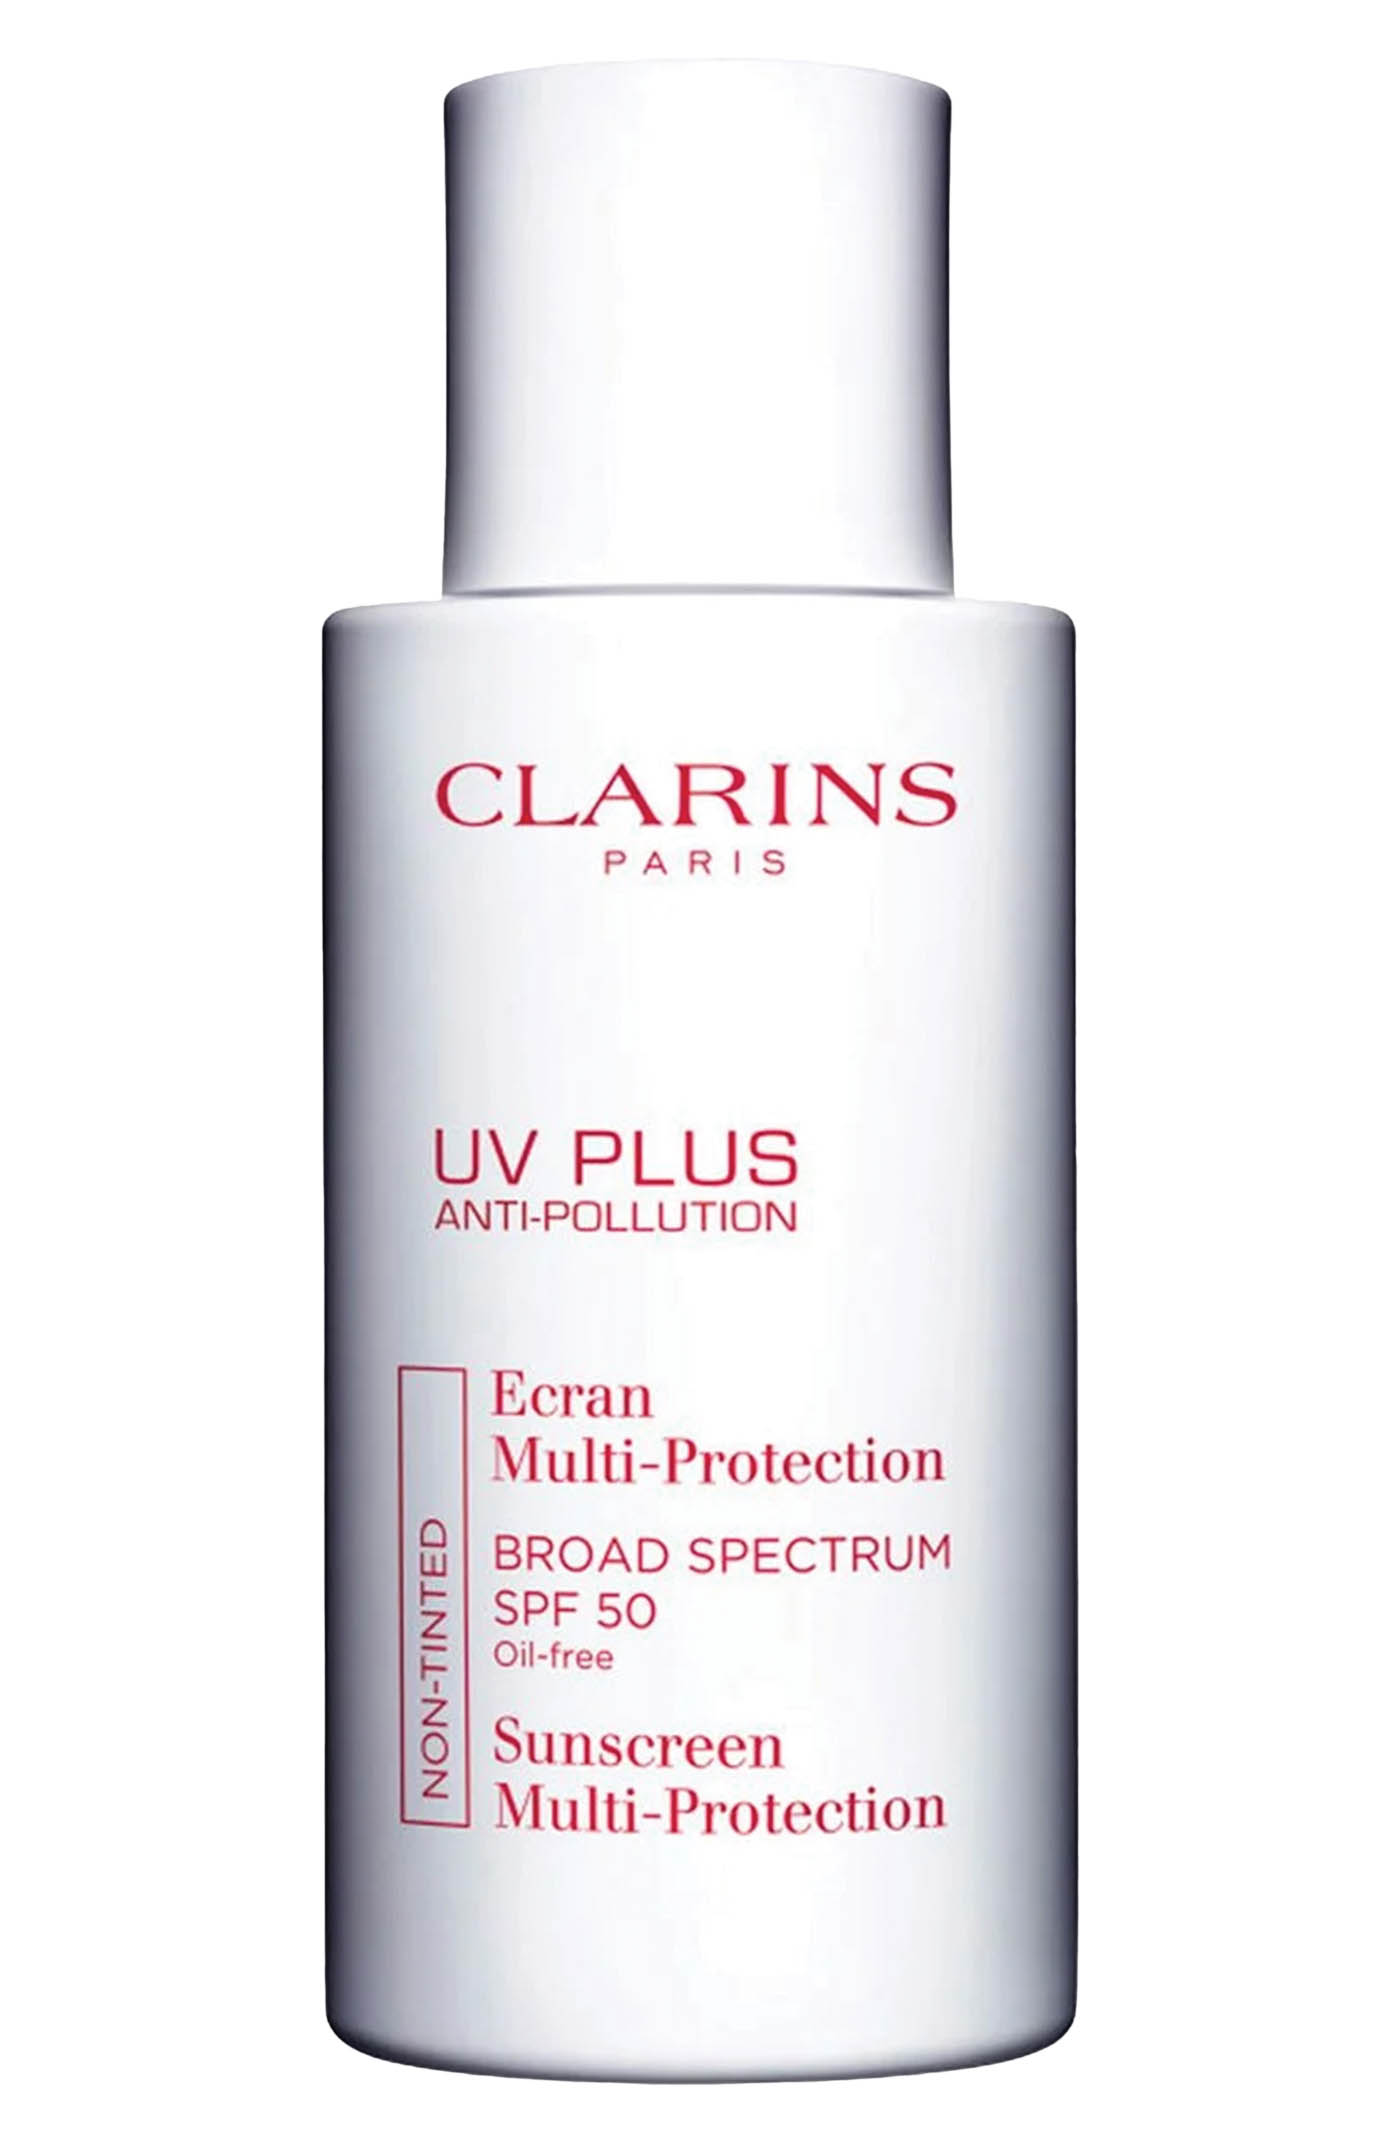 26 Clarins, Uv Plus Anti Pollution Antioxidant Face Sunscreen Spf 50, Nordstrom.com